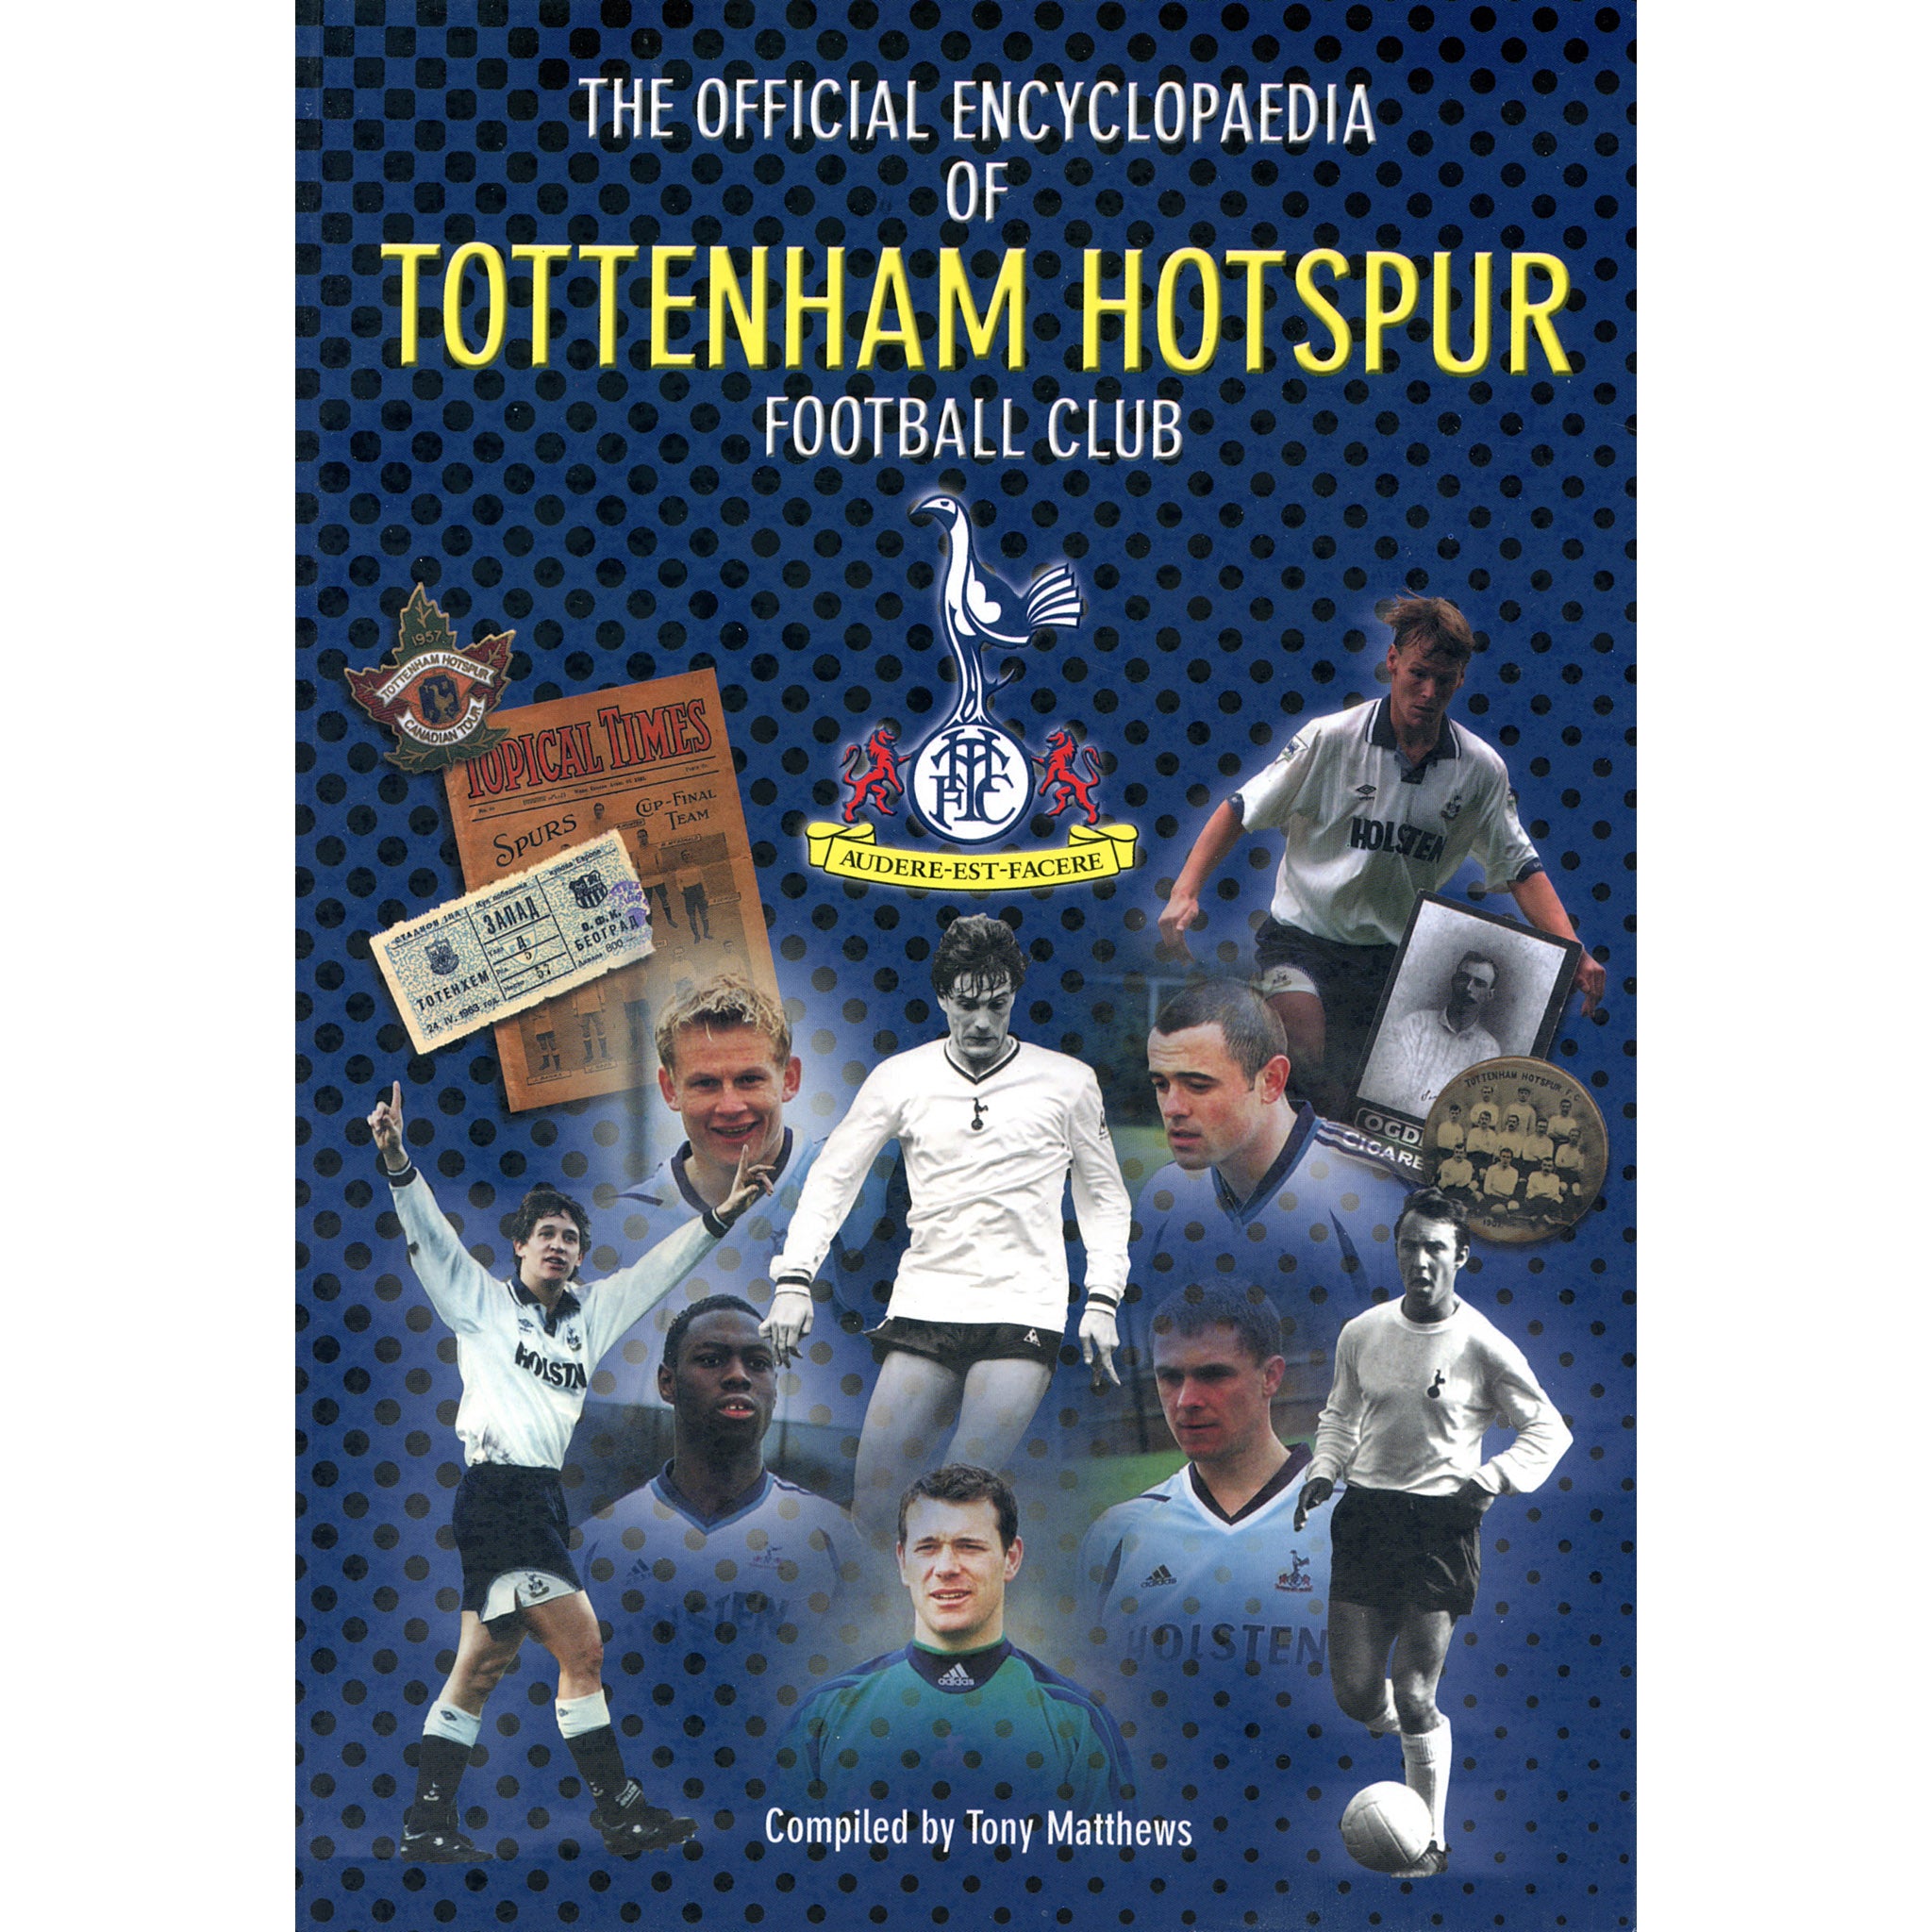 The Official Encyclopaedia of Tottenham Hotspur Football Club 1882-2001